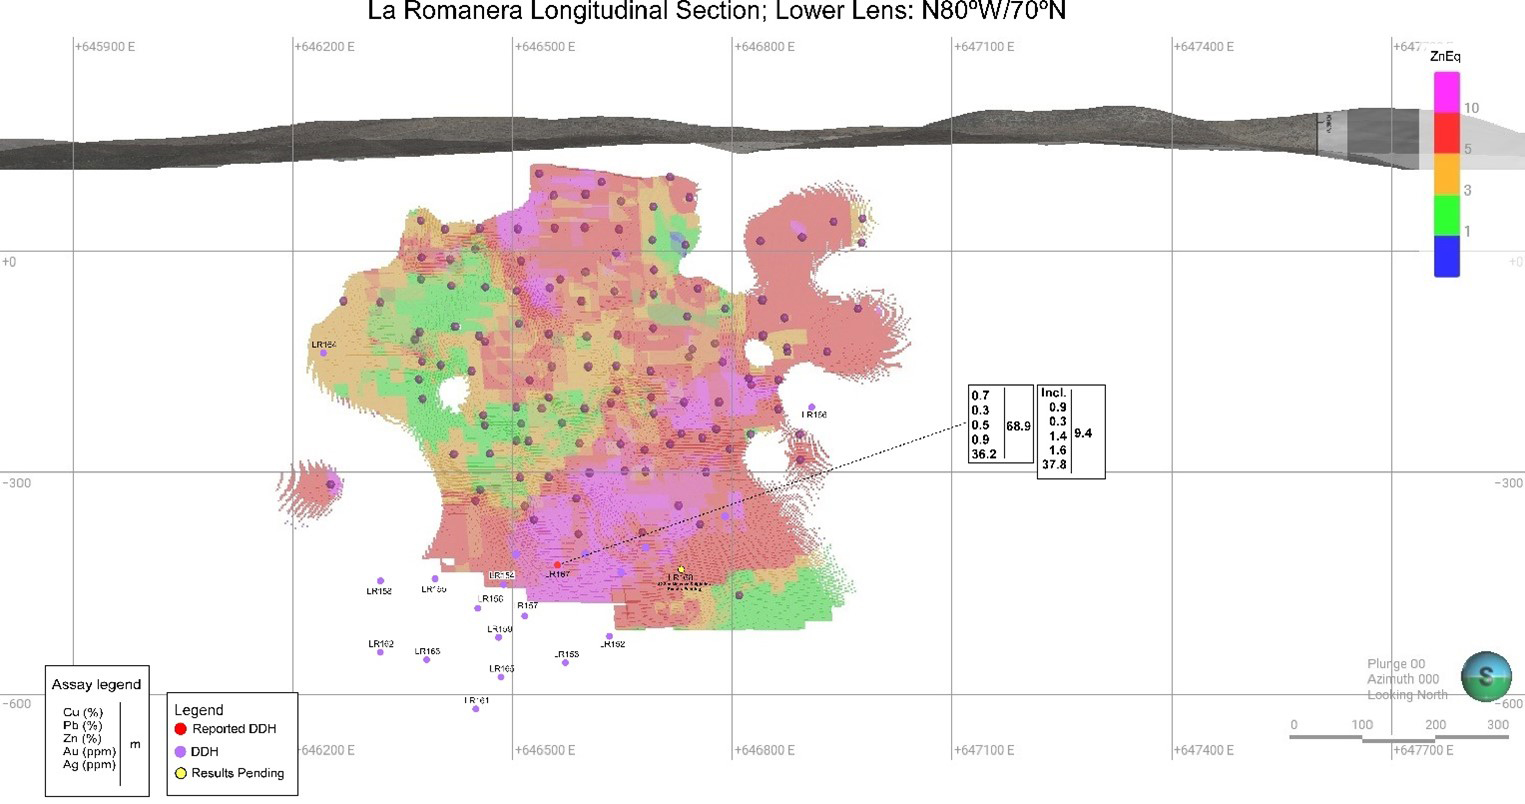 La Romanera Longitudinal Section showing the location of drill hole LR167 pierce point.